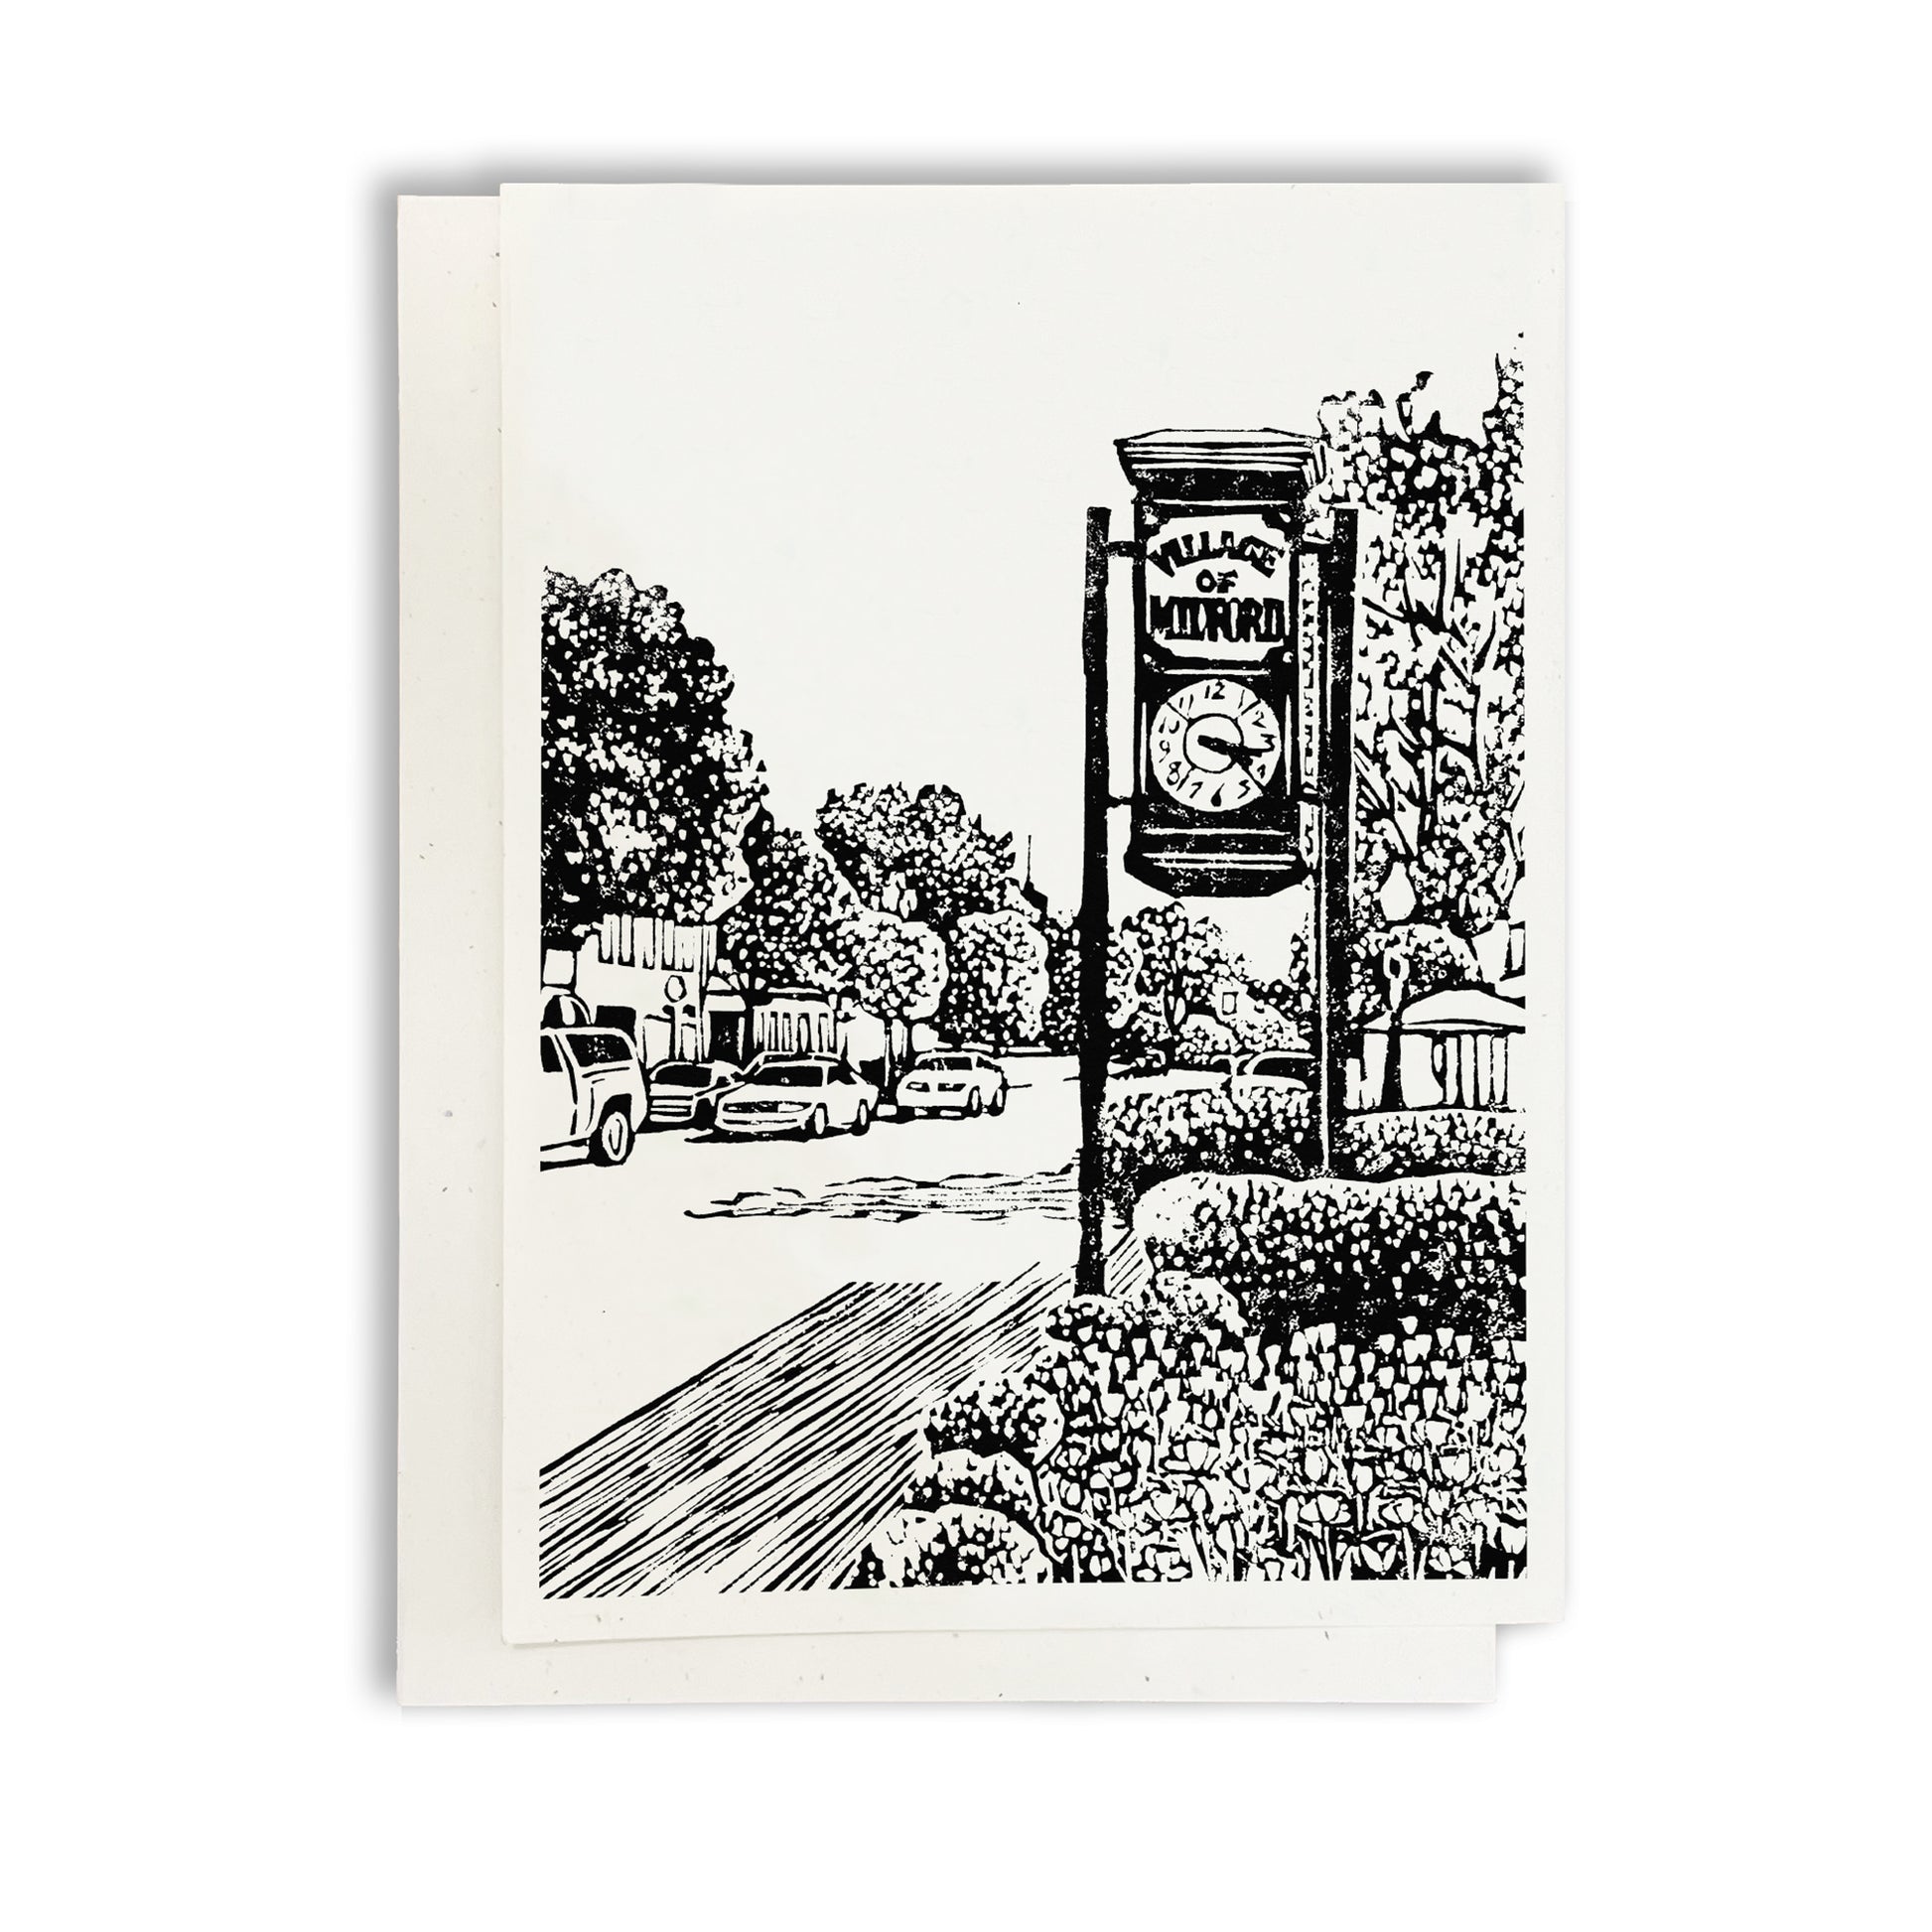 Milford Clock greeting card by Natalia Wohletz of Peninsula Prints.